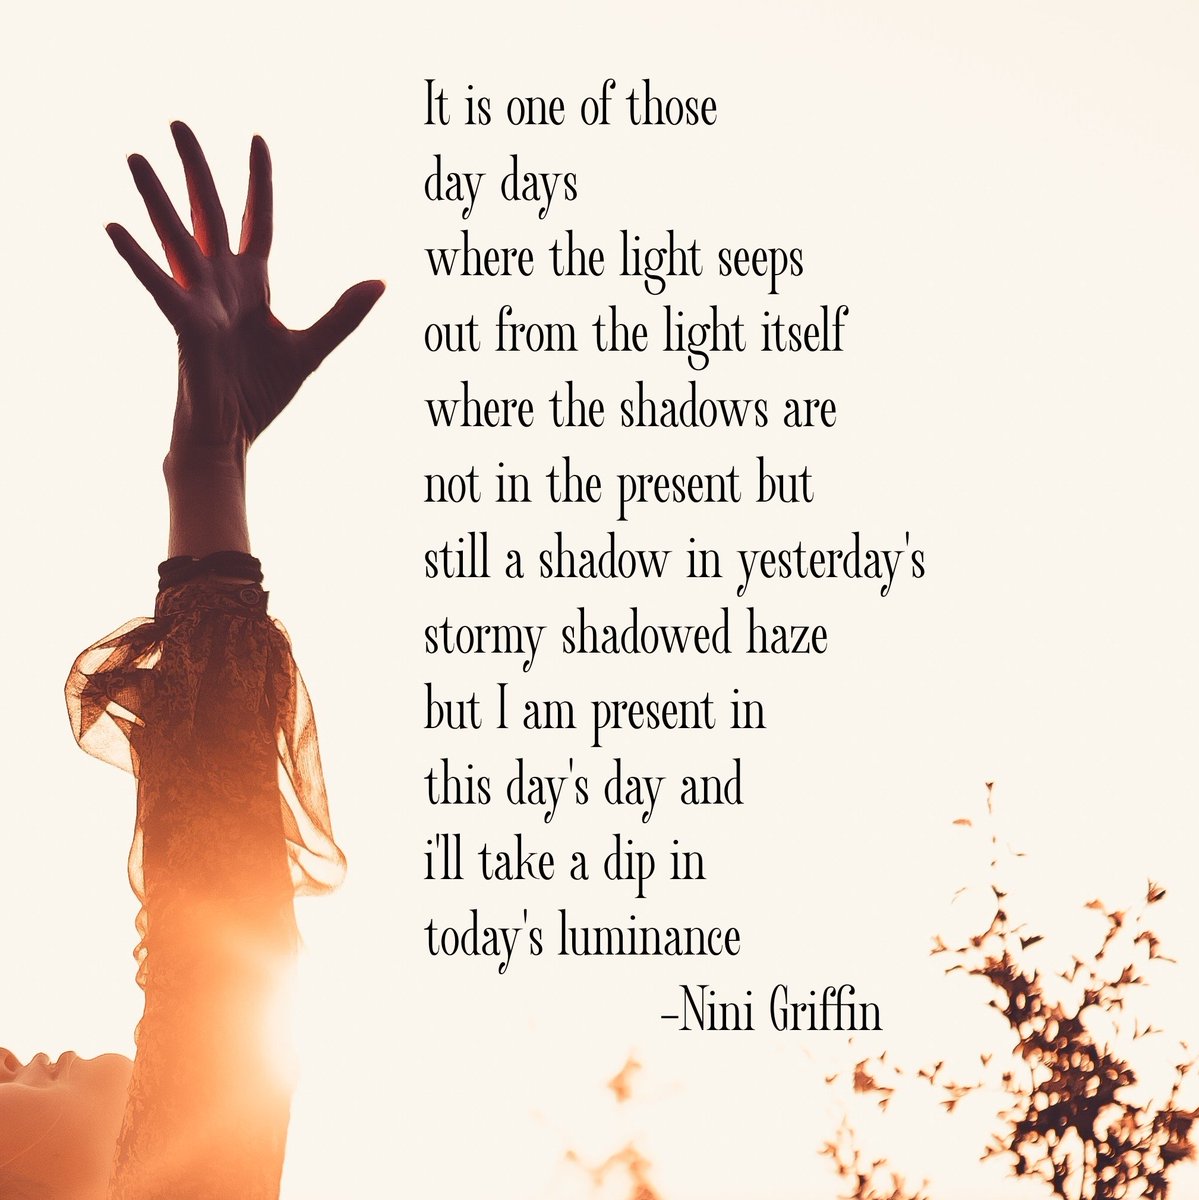 The day of days
              -Nini Griffin
#irishwriter #outoftheshadows #naturewriting #ireland #light #poetry #quotes #poetrycommunity #WritingCommunity #writersoftwitter #yesterday #life